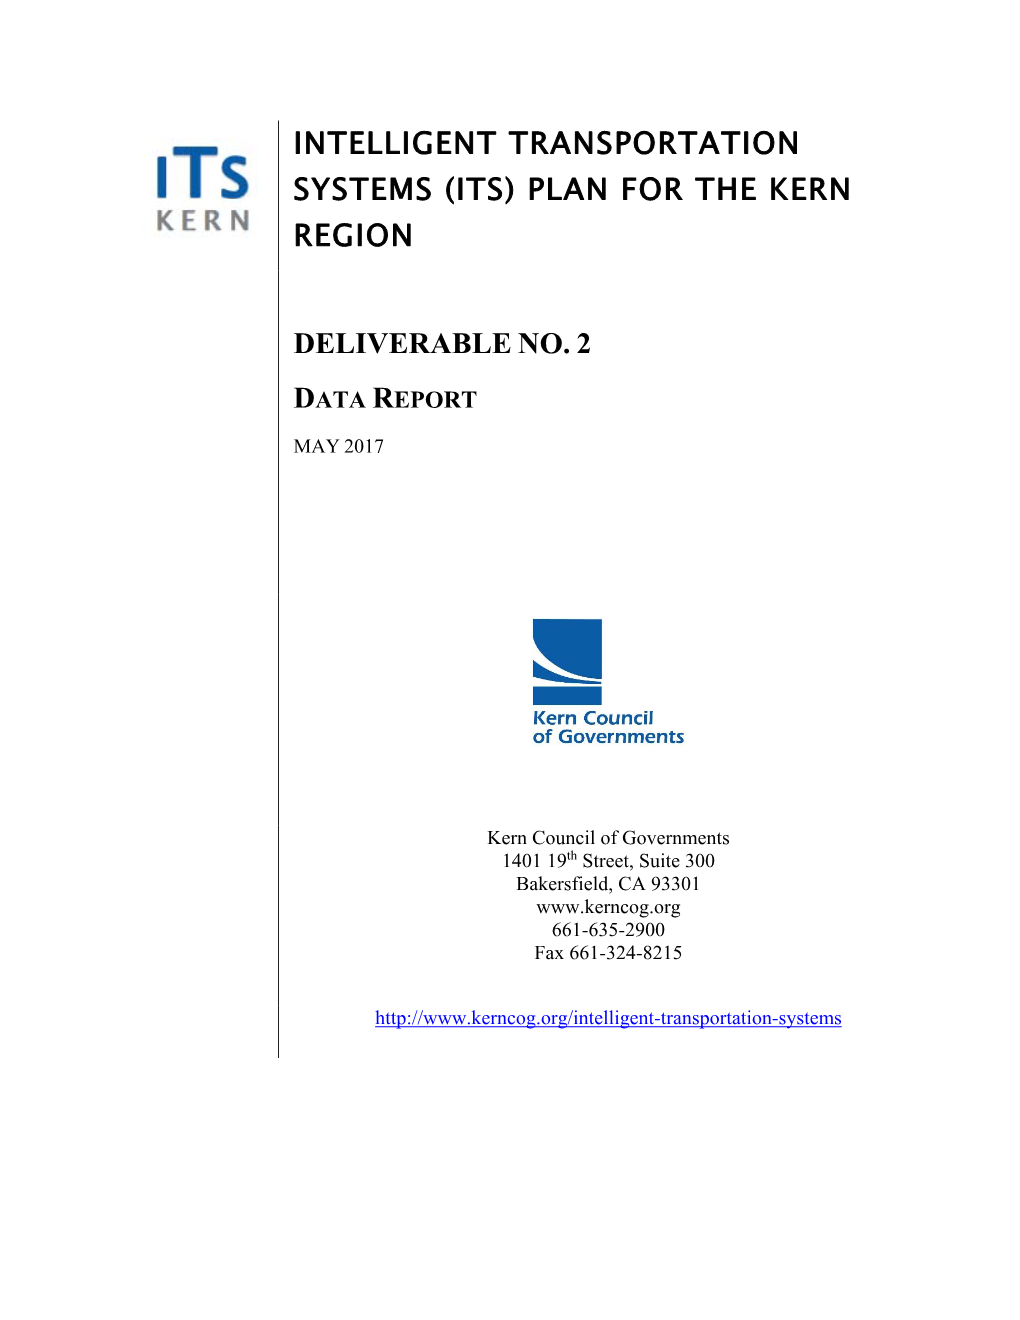 Intelligent Transportation Systems (Its) Plan for the Kern Region